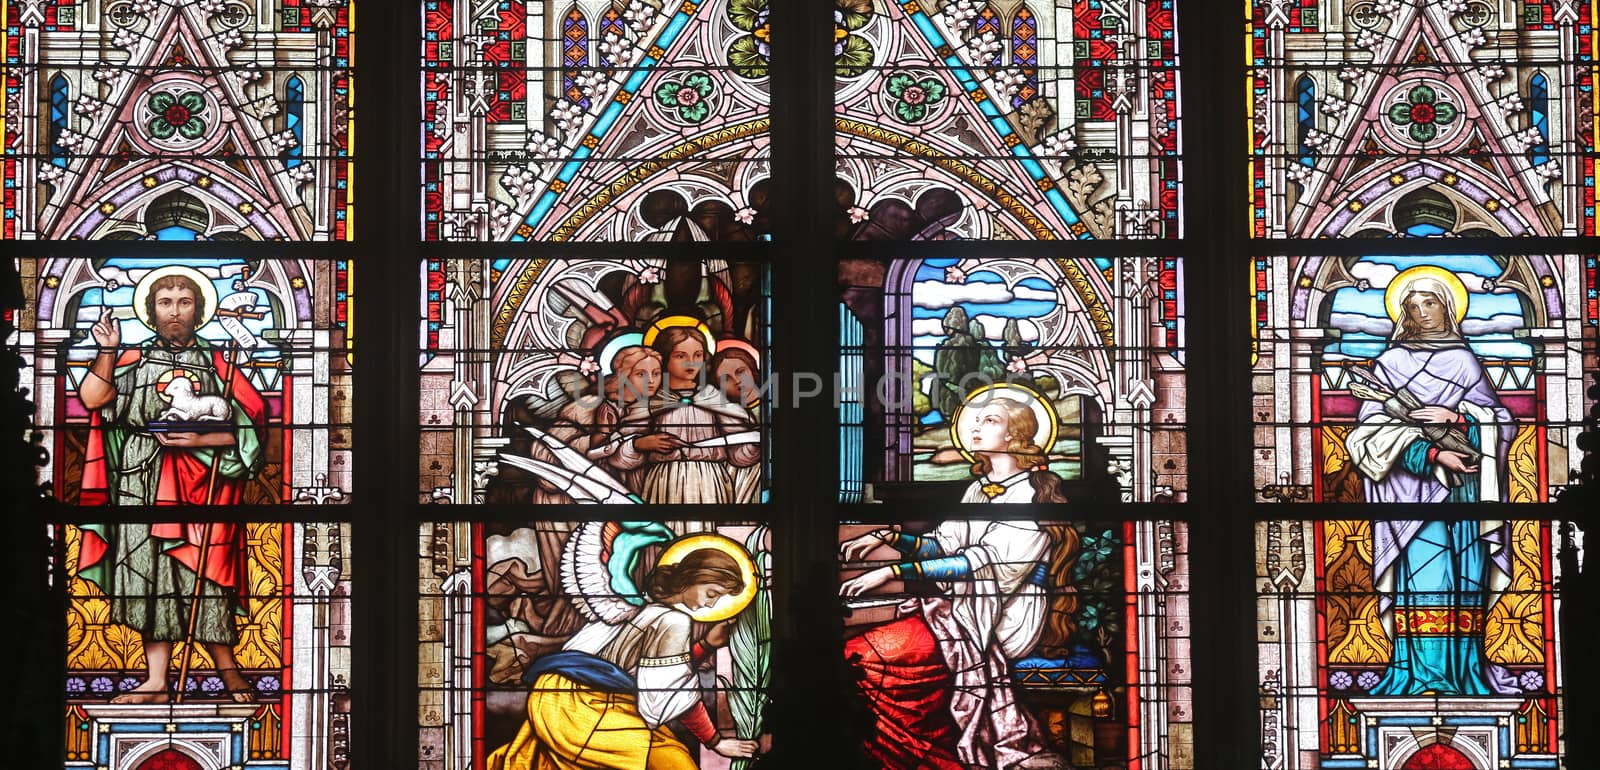 Saint Cecilia, stained glass in Minoriten kirche in Vienna, Austria